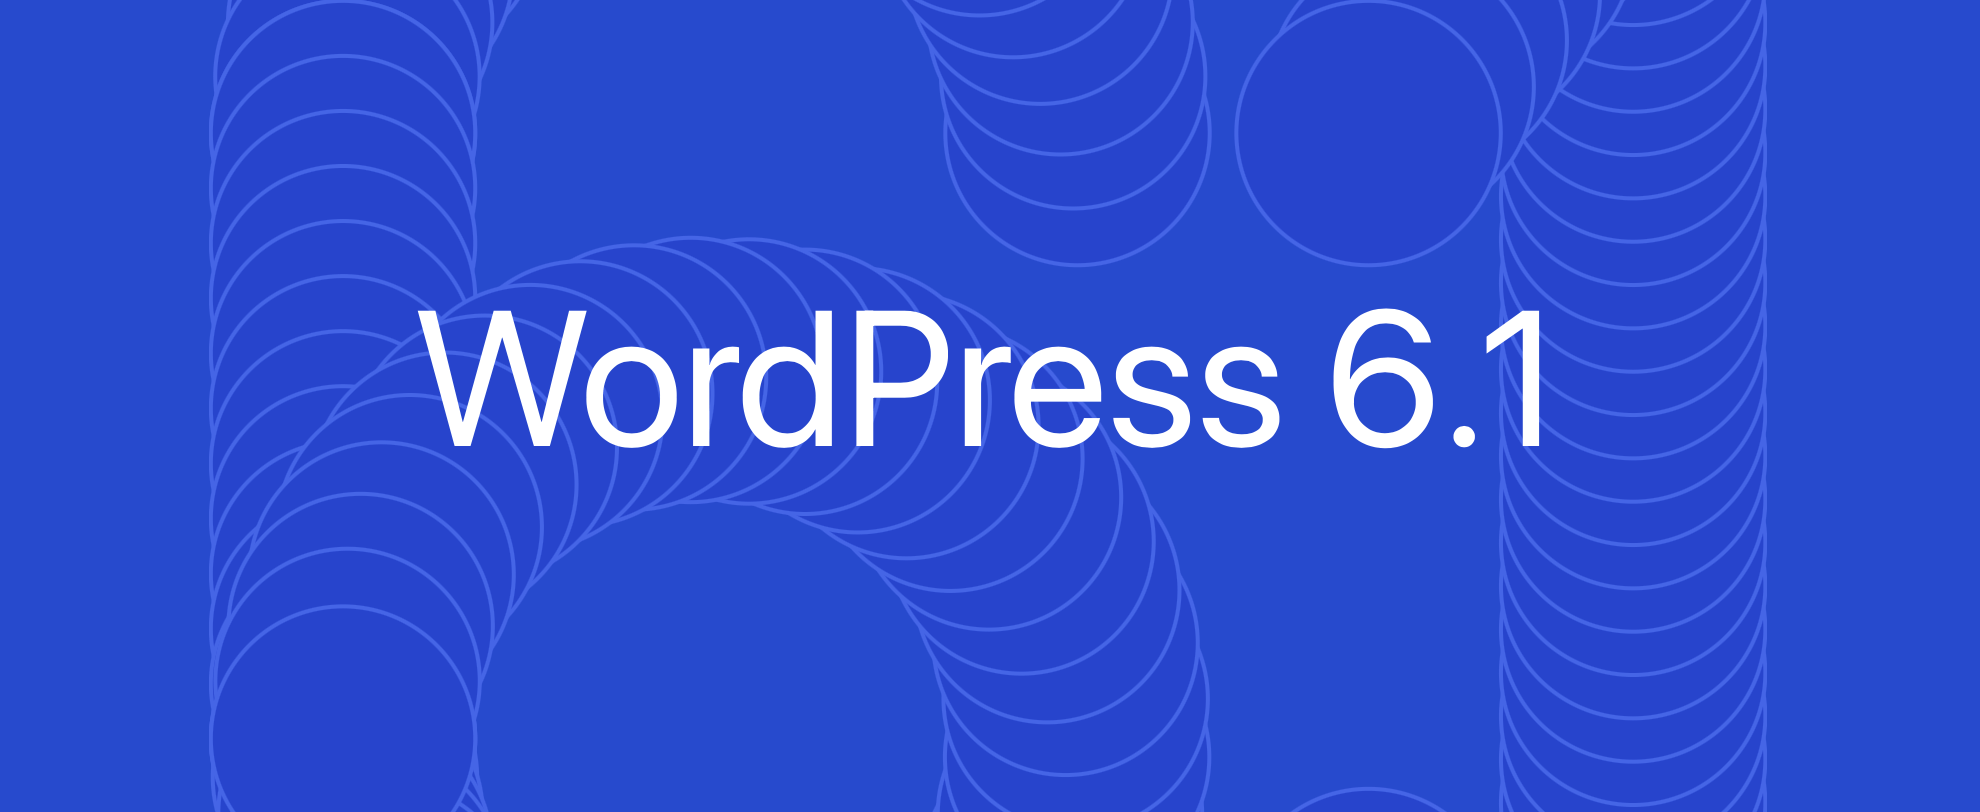 WordPress 6.1 has released